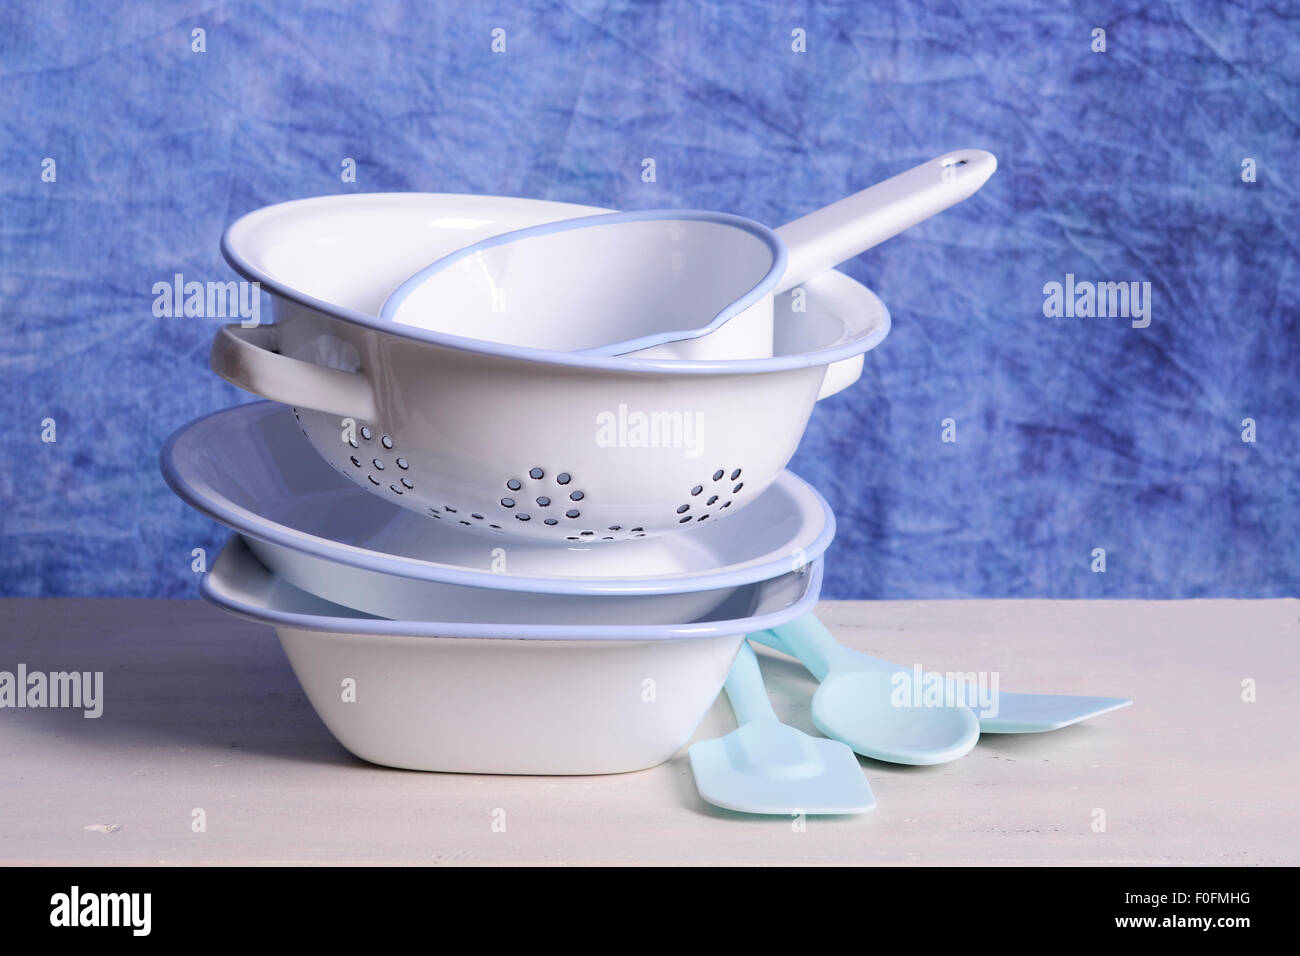 https://c8.alamy.com/comp/F0FMHG/stack-of-blue-and-white-enamel-bowls-including-loaf-pan-pie-dish-colander-F0FMHG.jpg